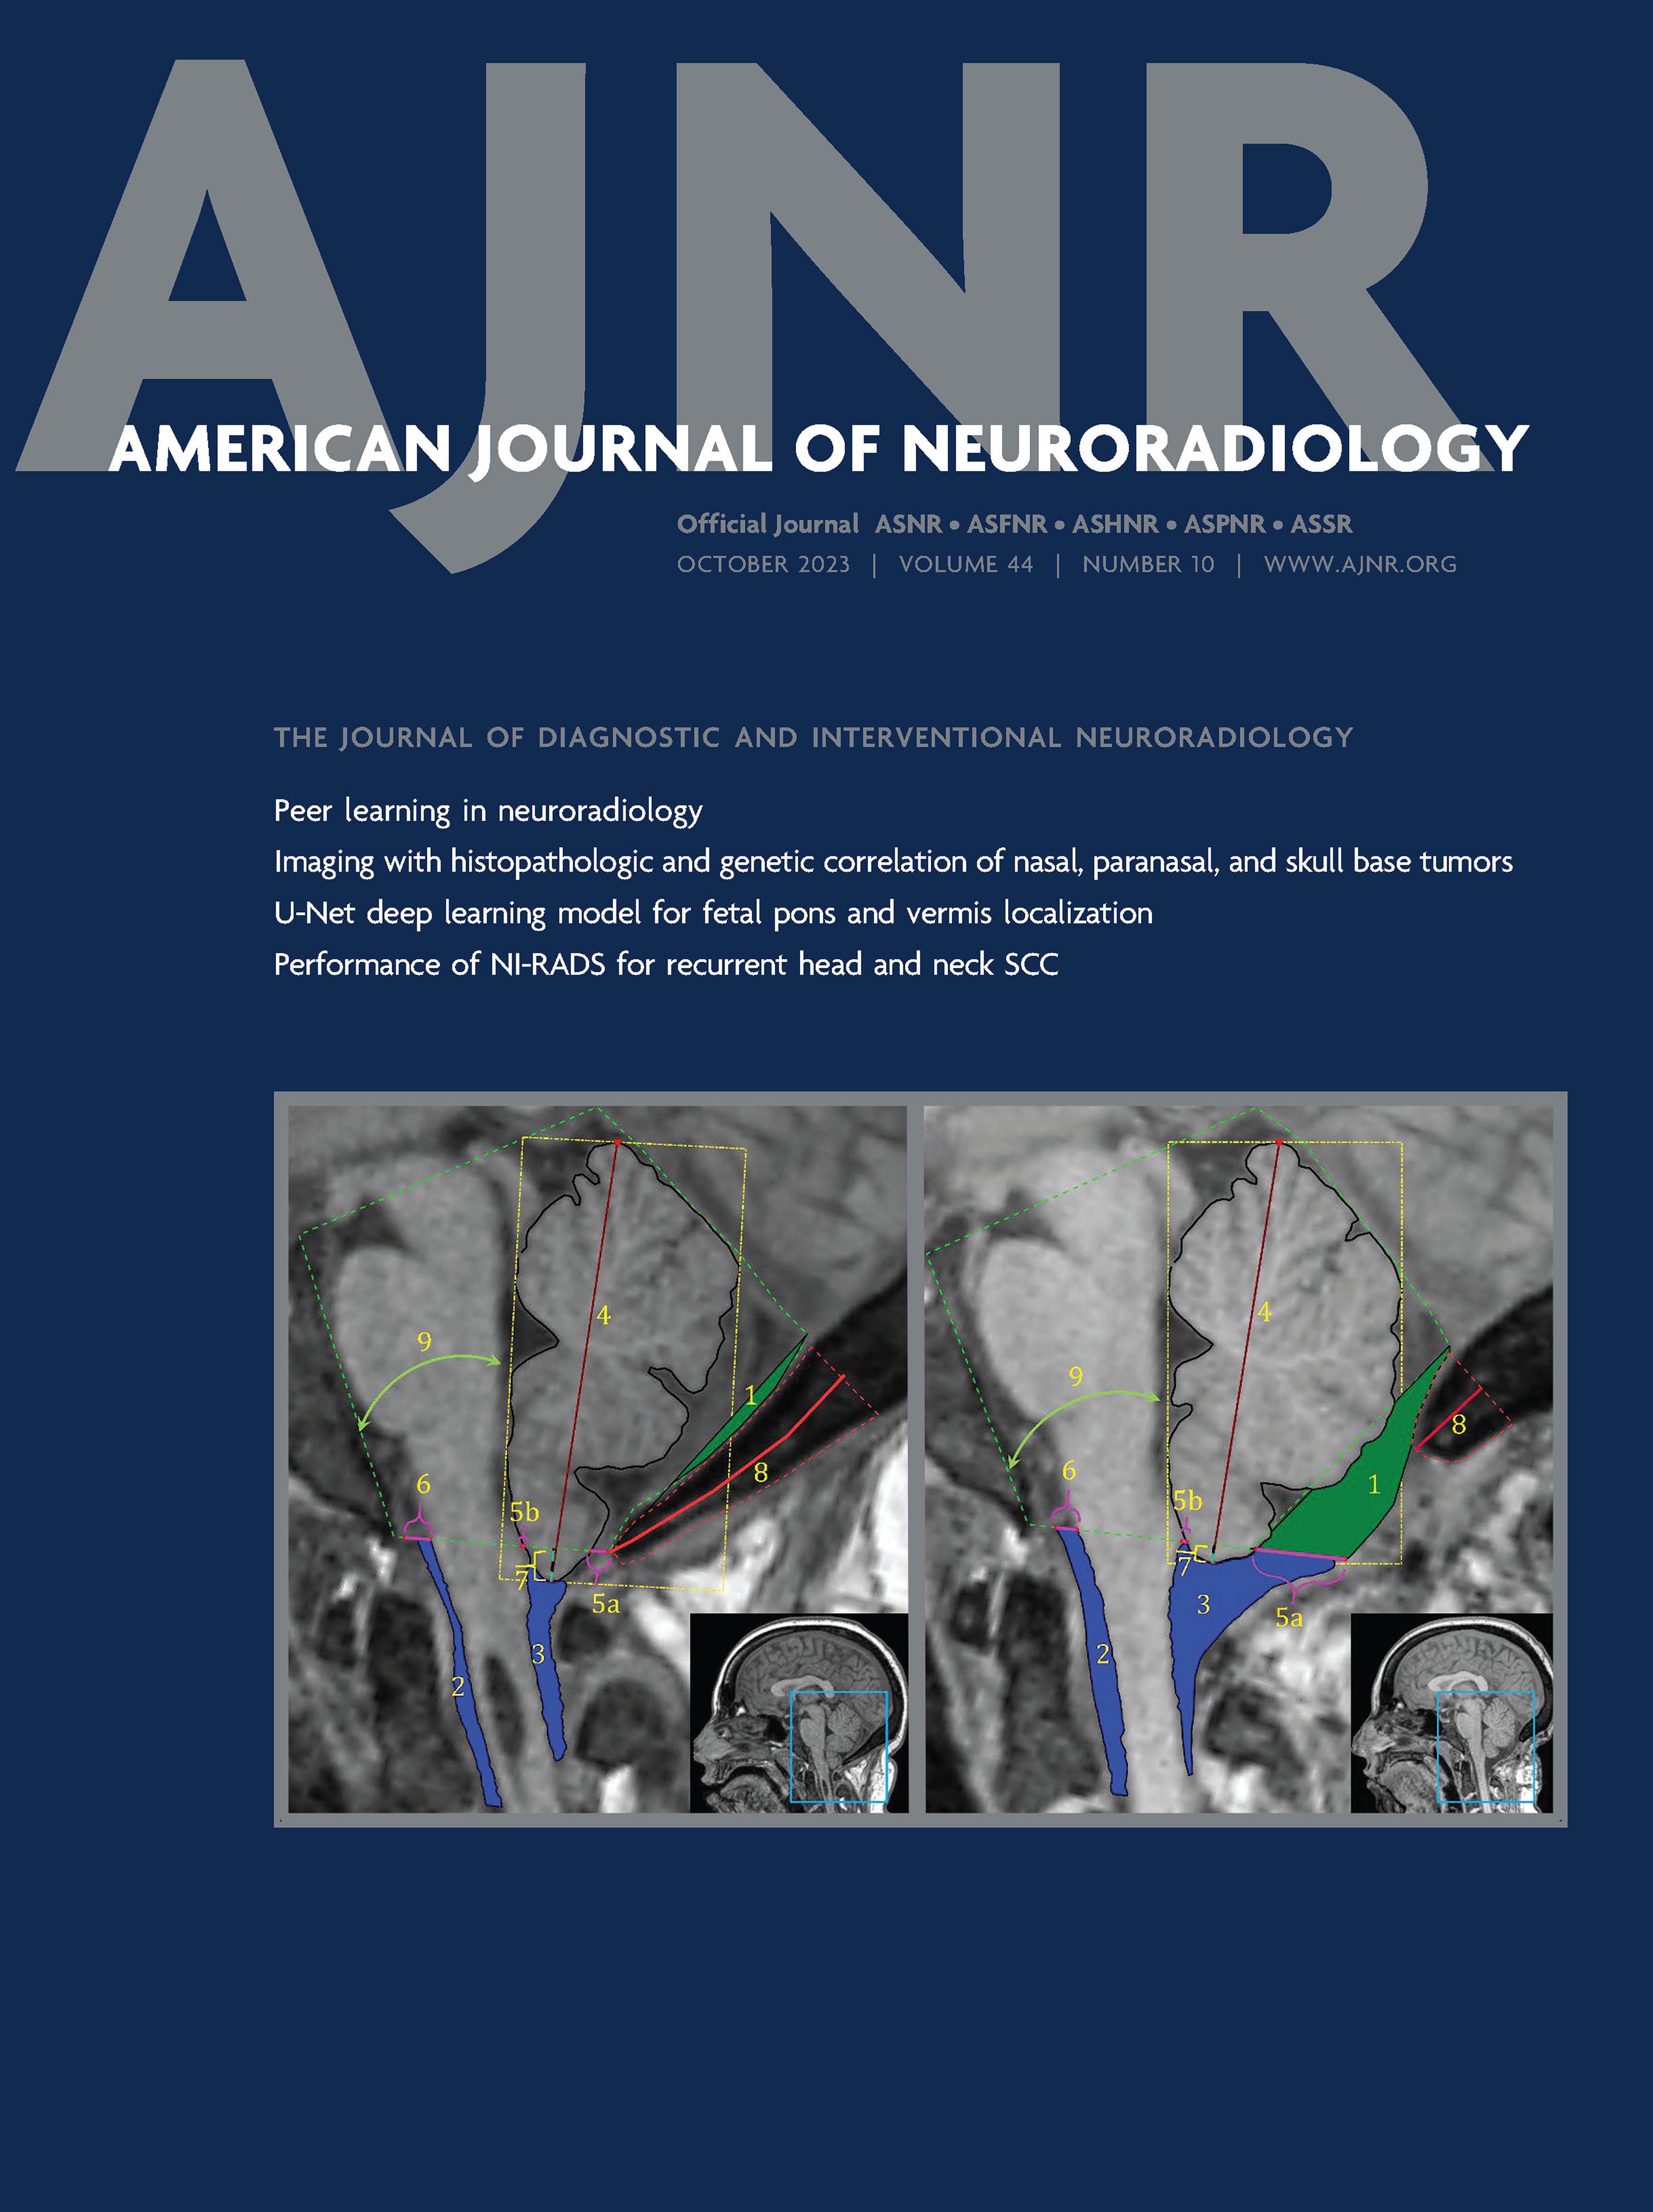 Cerebral Hemodynamic and Metabolic Abnormalities in Neonatal Hypocalcemia: Findings from Advanced MRI [PEDIATRICS]